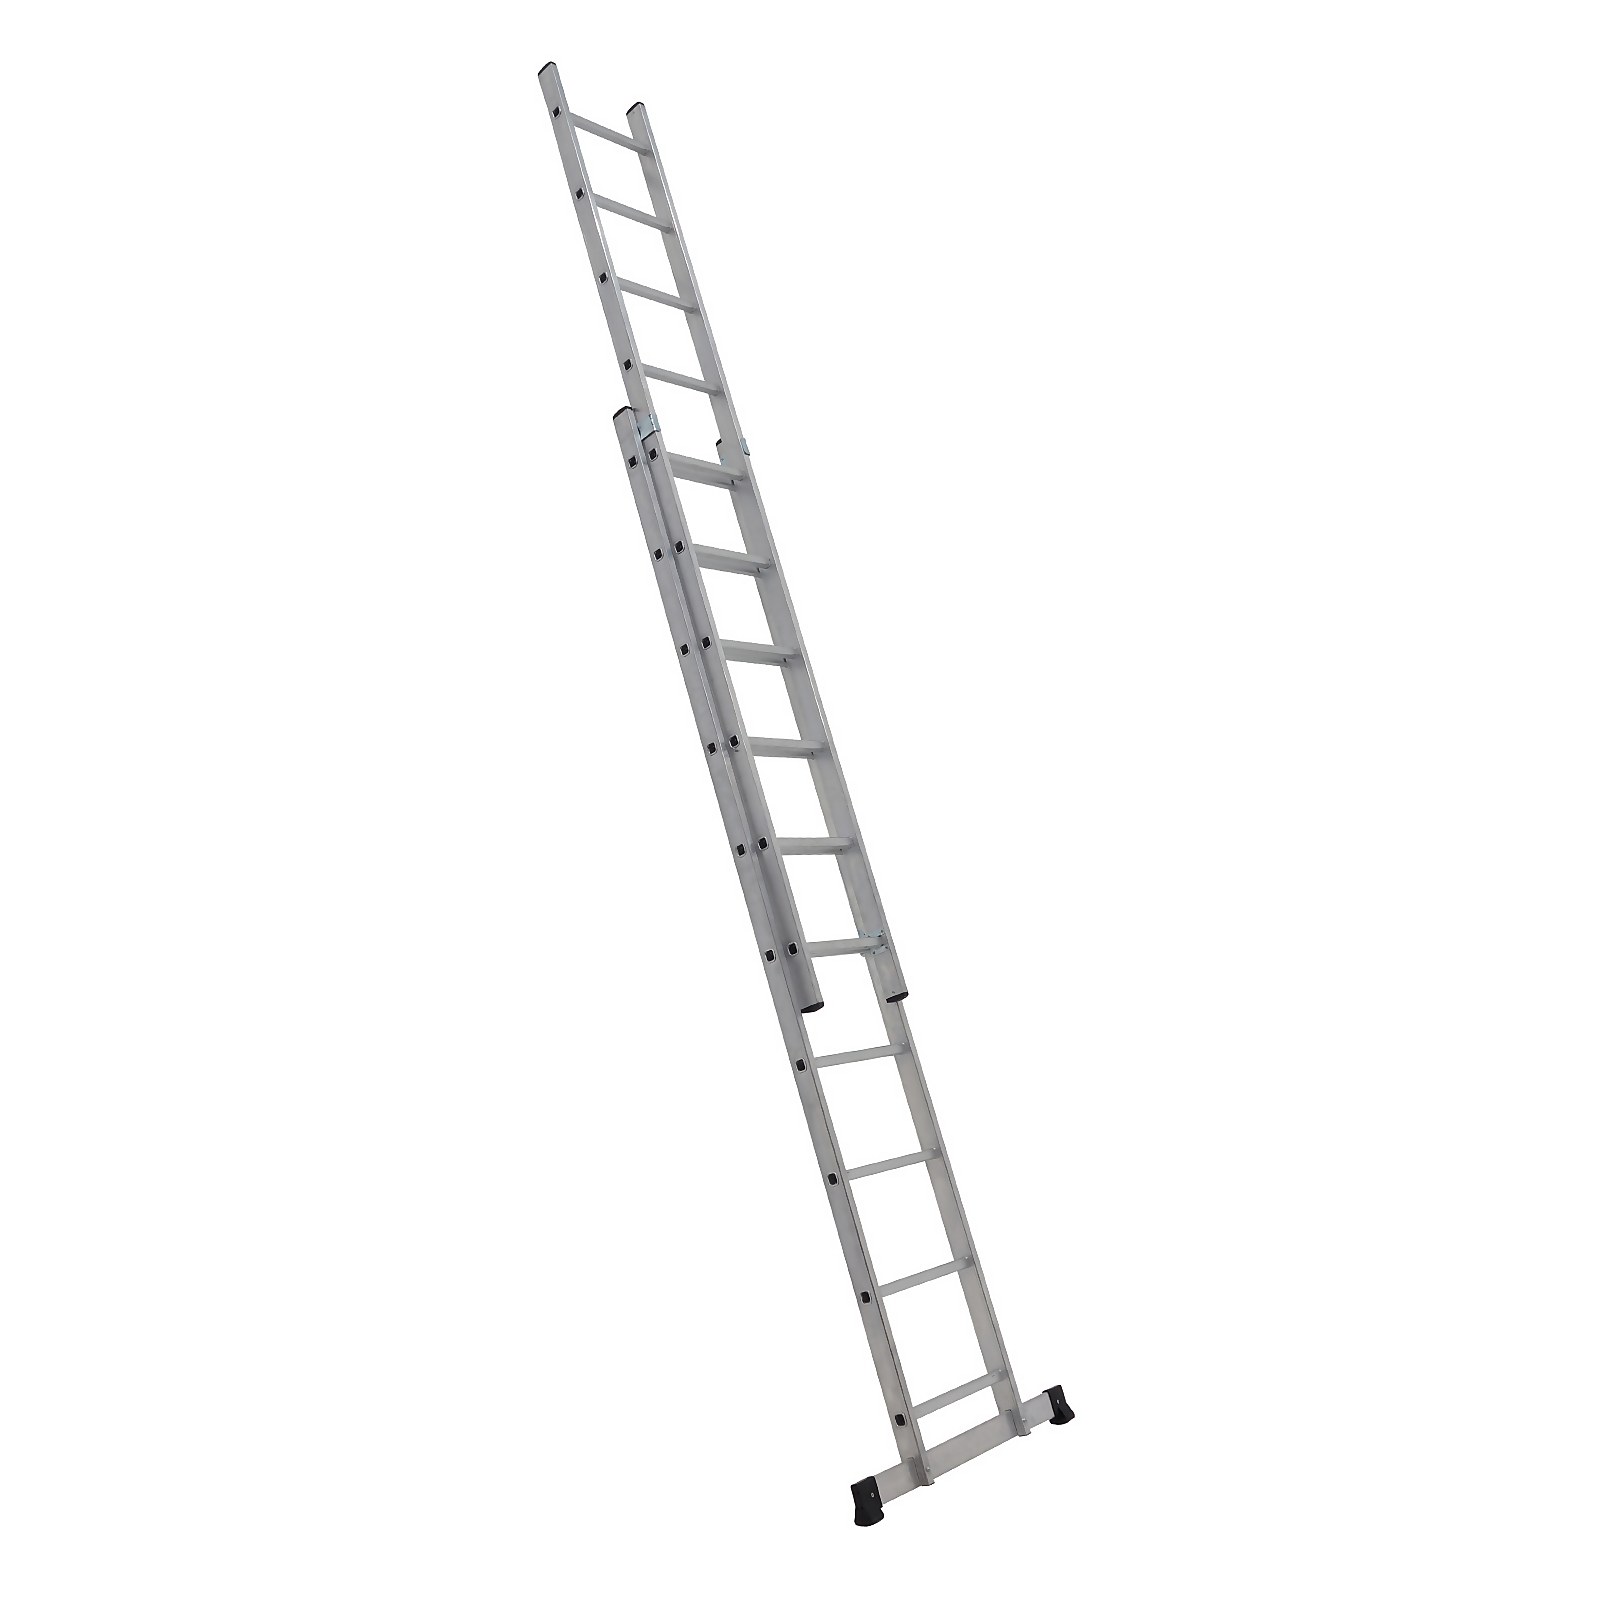 Photo of Rhino 2x10 Professional Extension Ladder - 4.8m